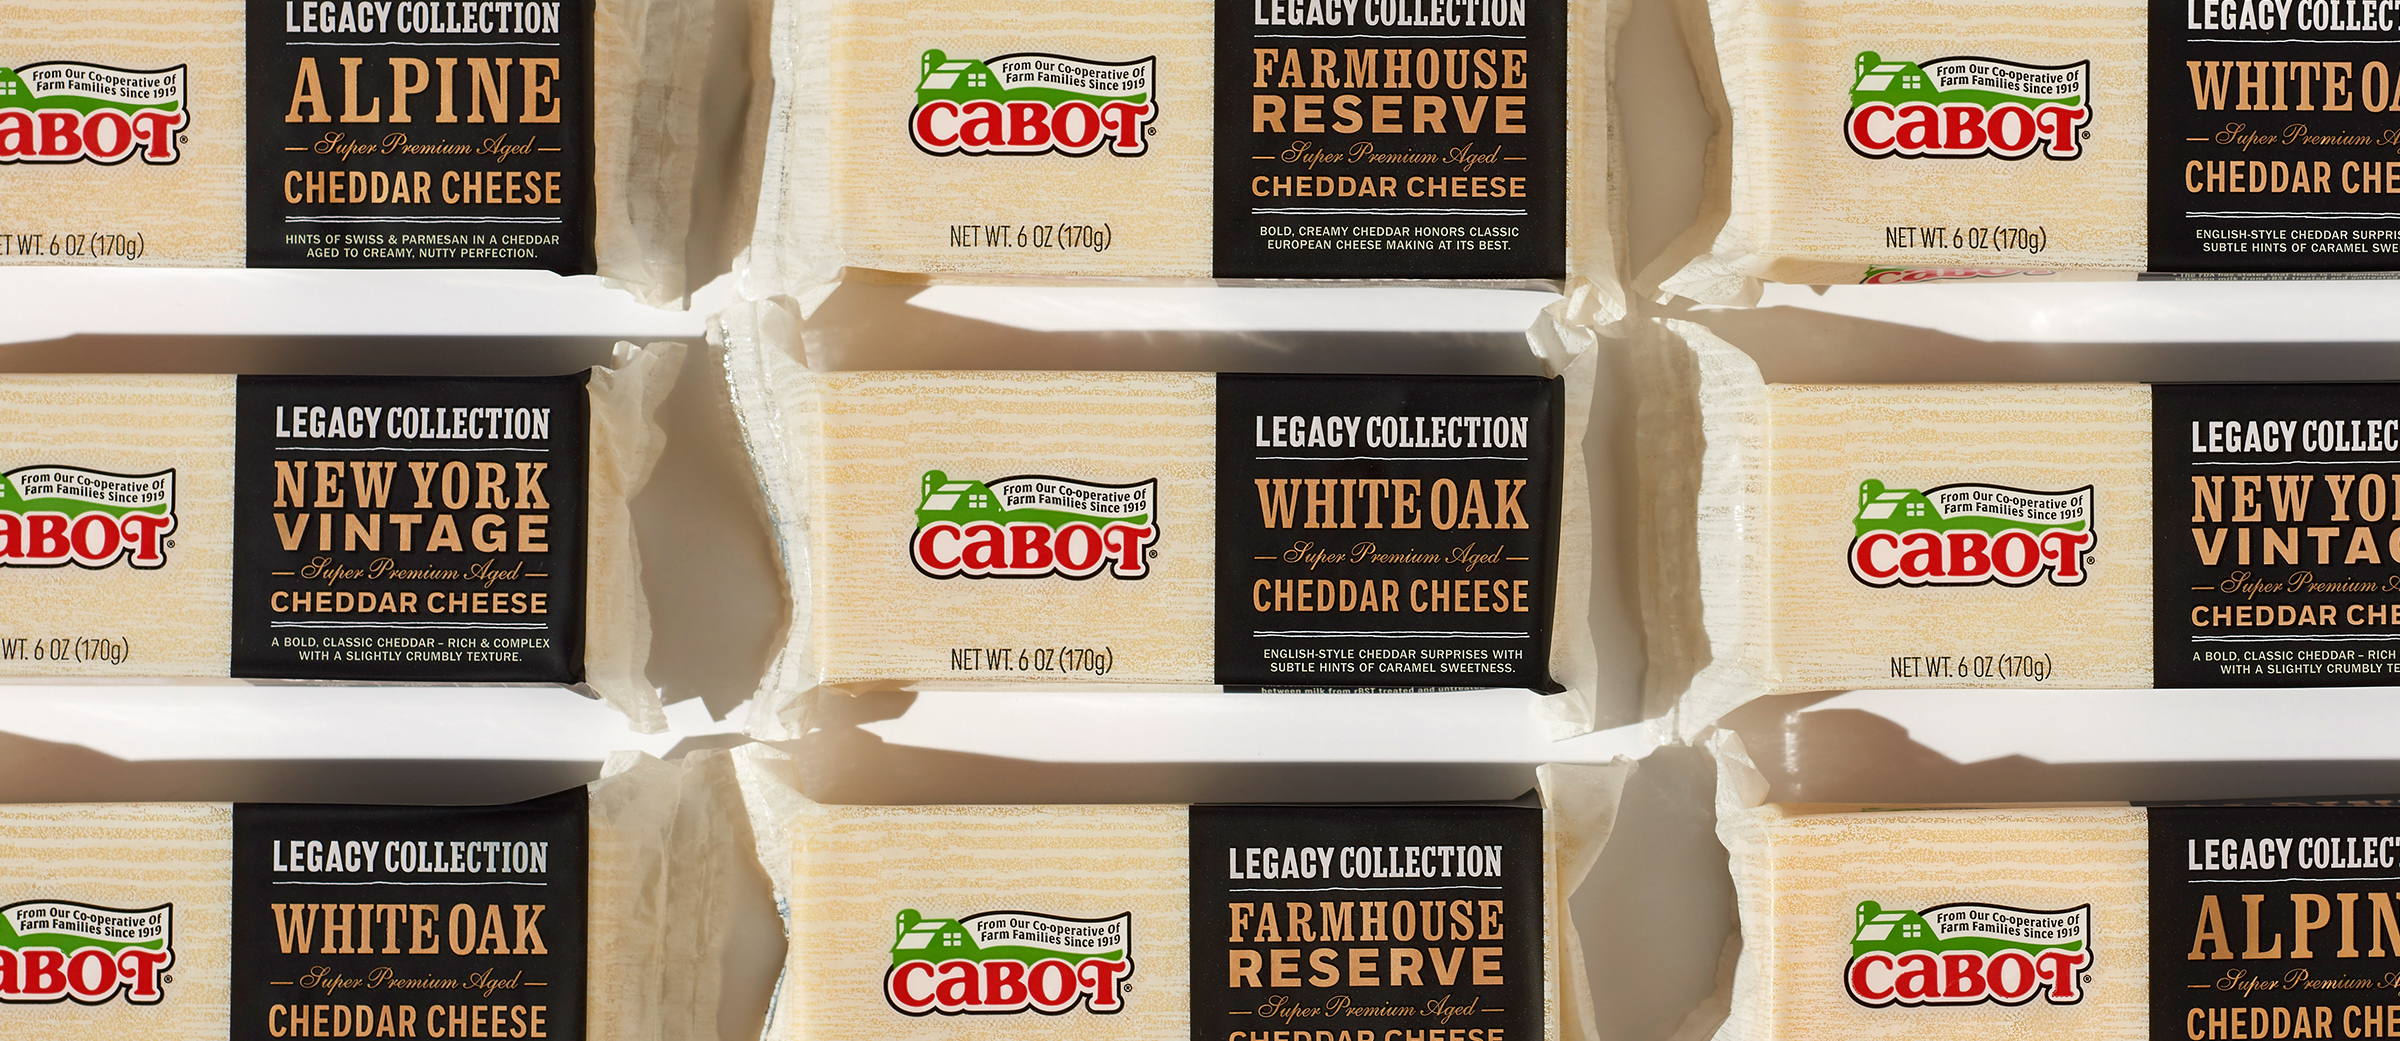 Cabot Cheese packaging design by Werner Design Werks